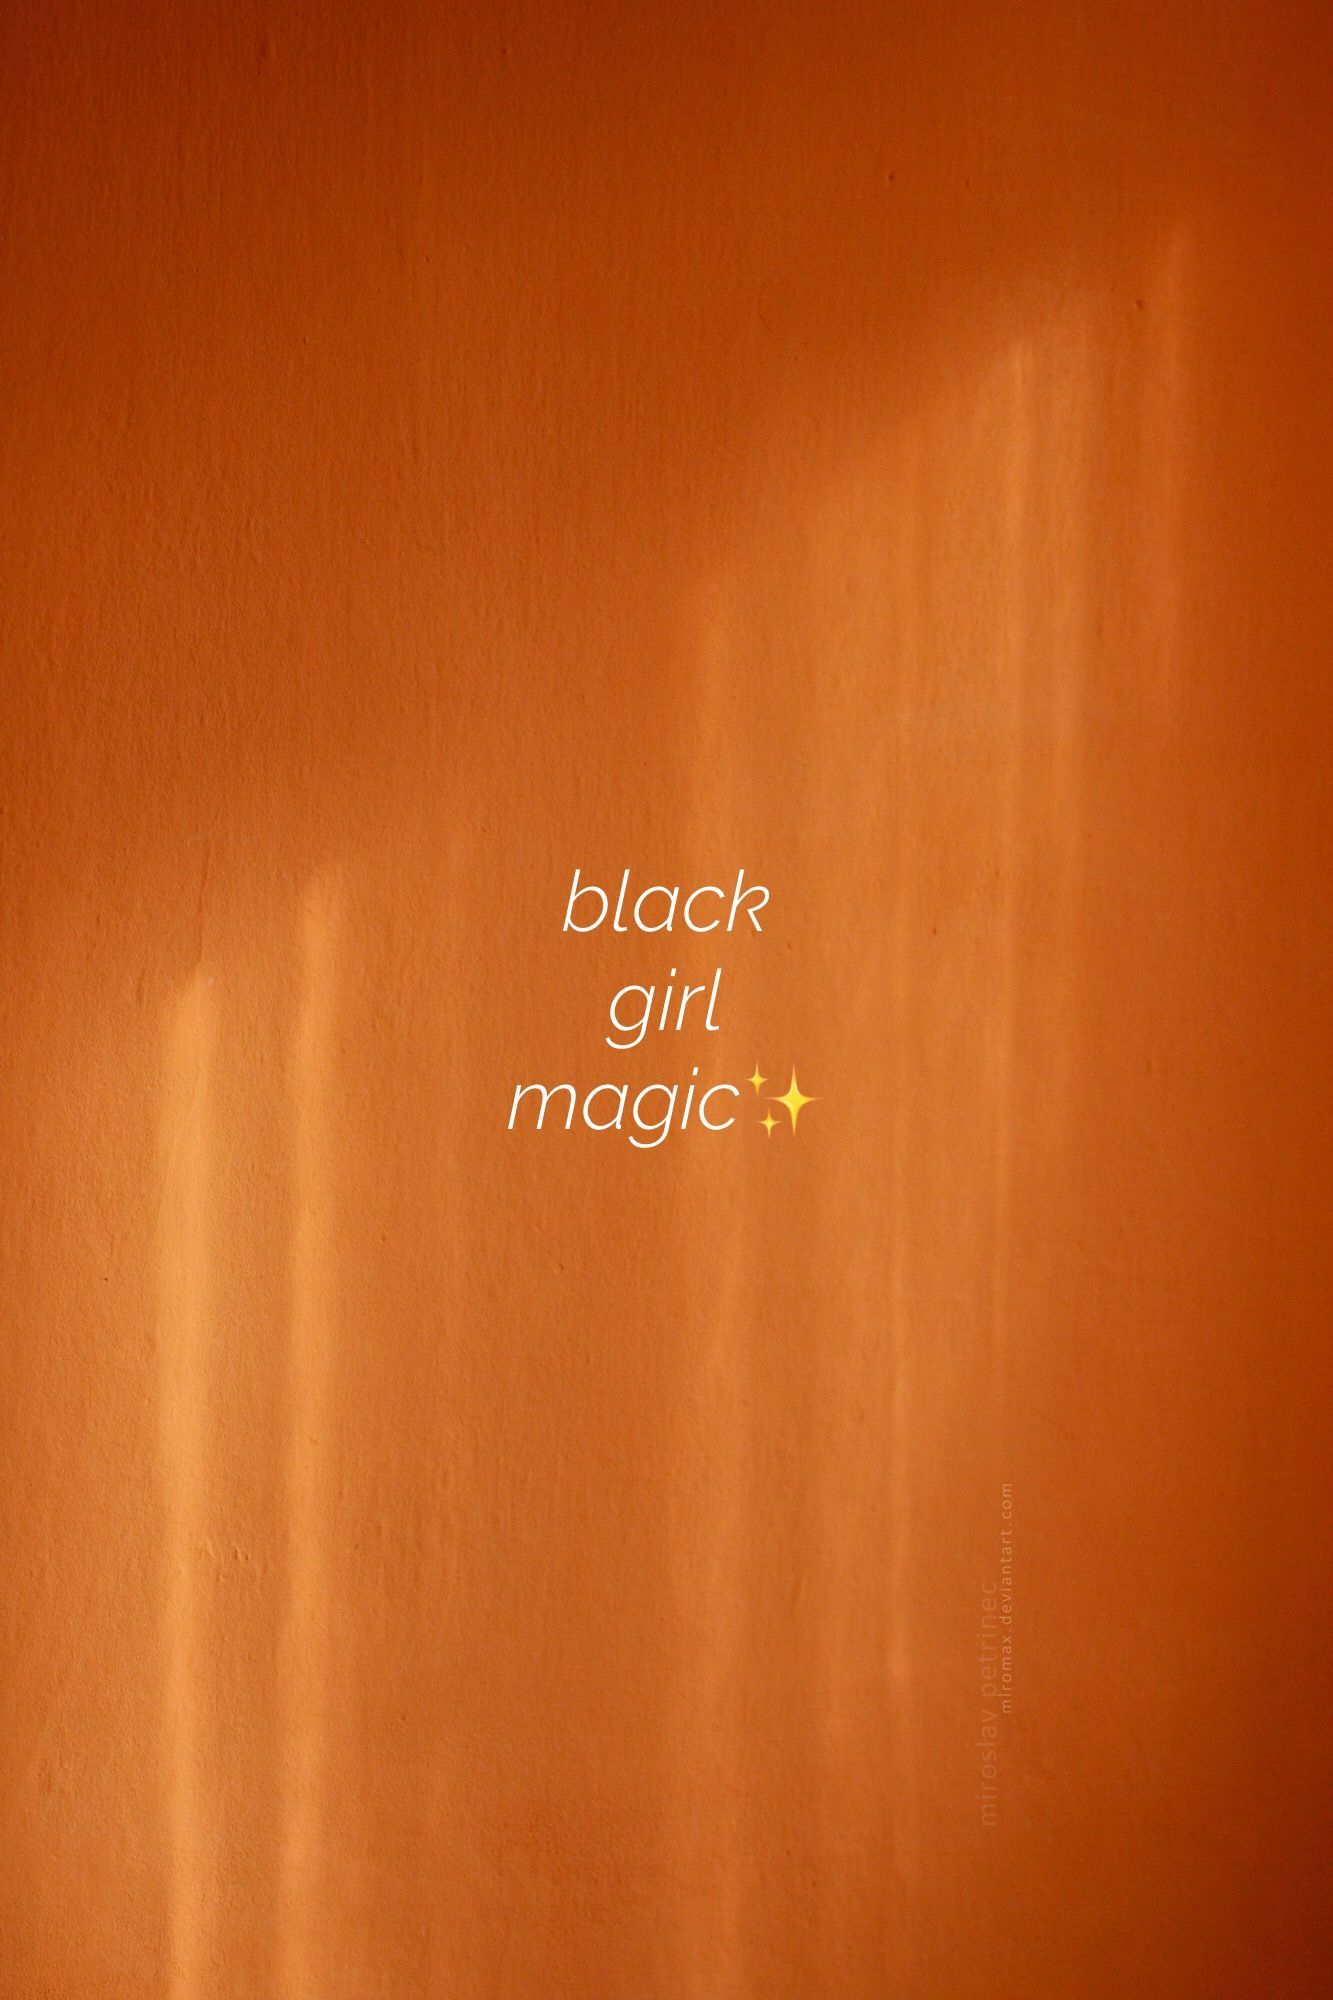 black girl magic✨ Made by me. Black girl magic, Magic aesthetic, Black girl cartoon